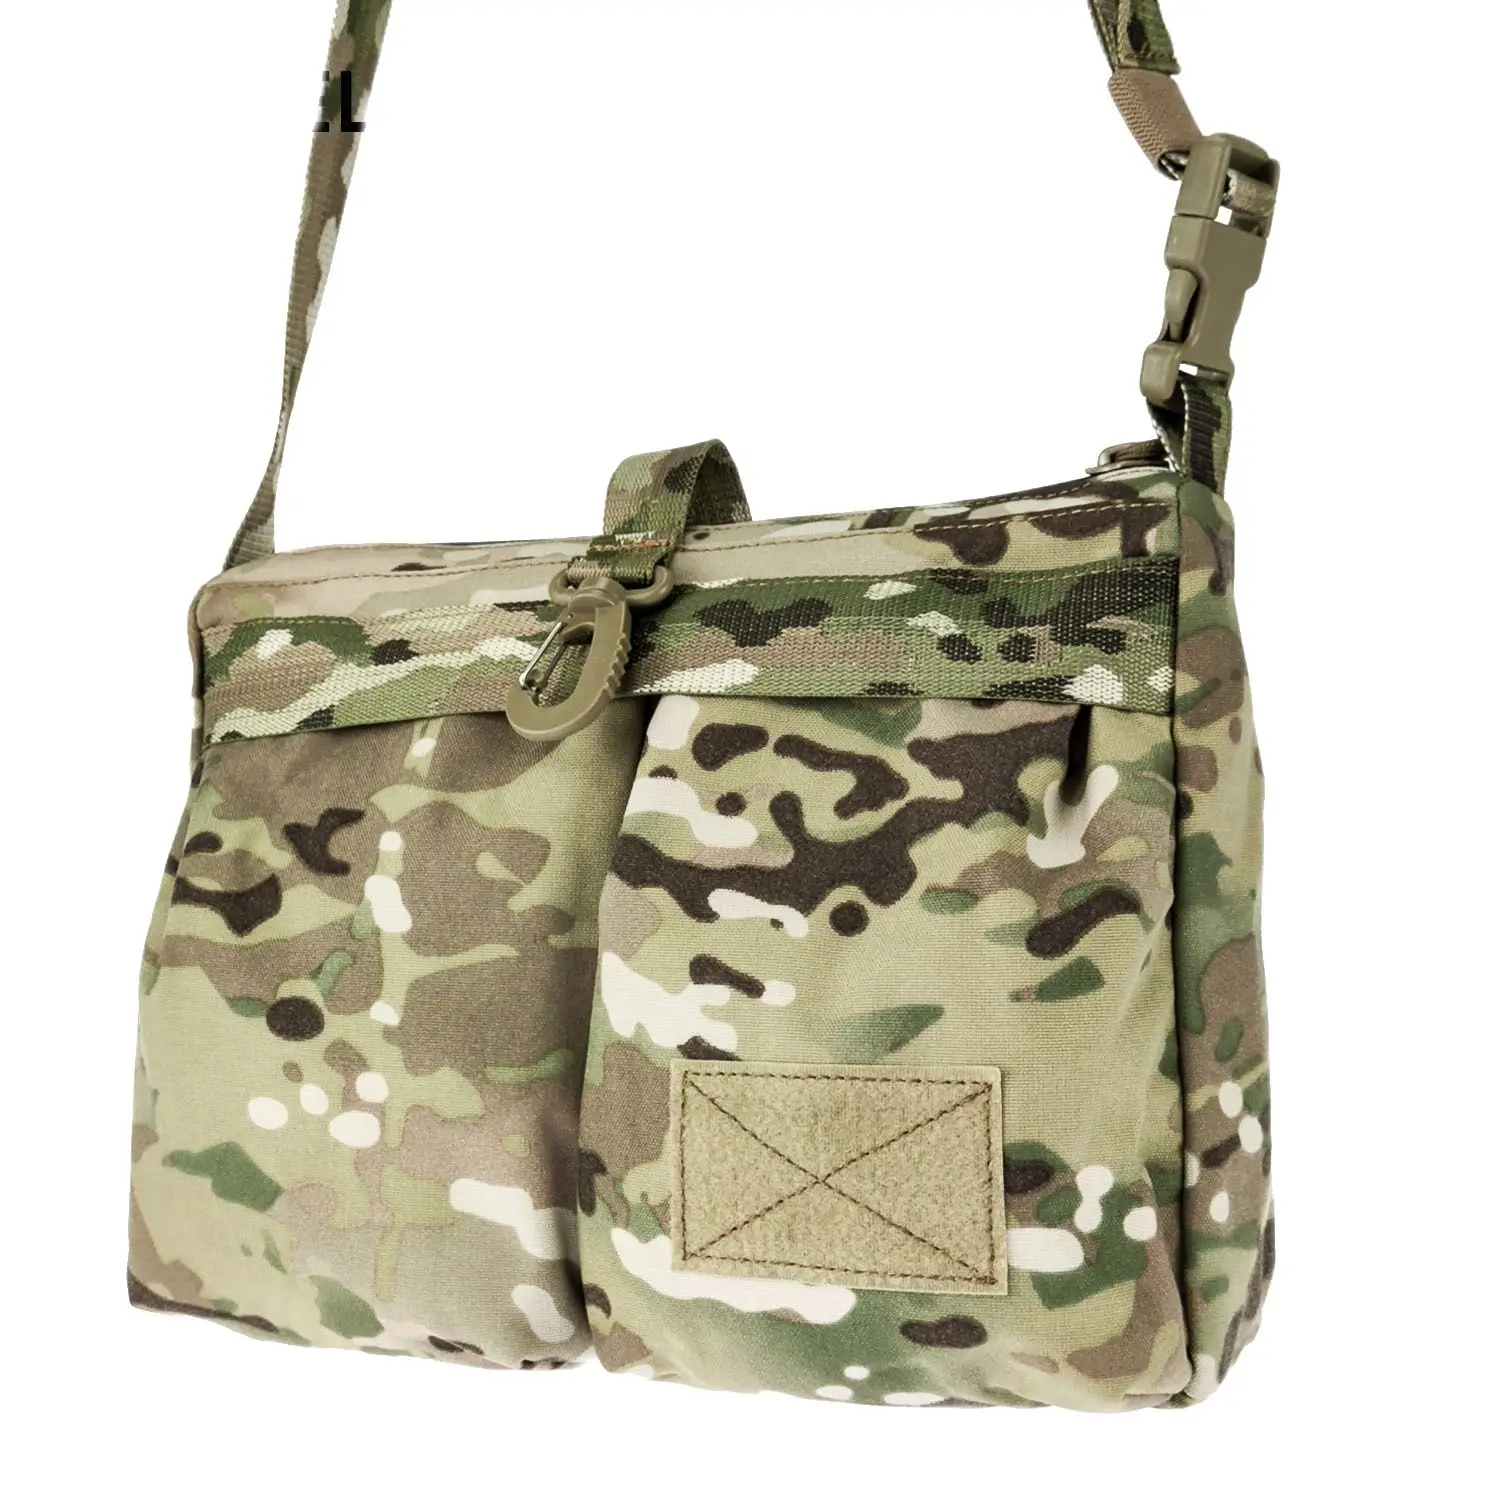 Mini Helmet Bag Men's And Women's Trend Tactical Outdoor Army Camouflage Single Shoulder Messenger Bag Backpack